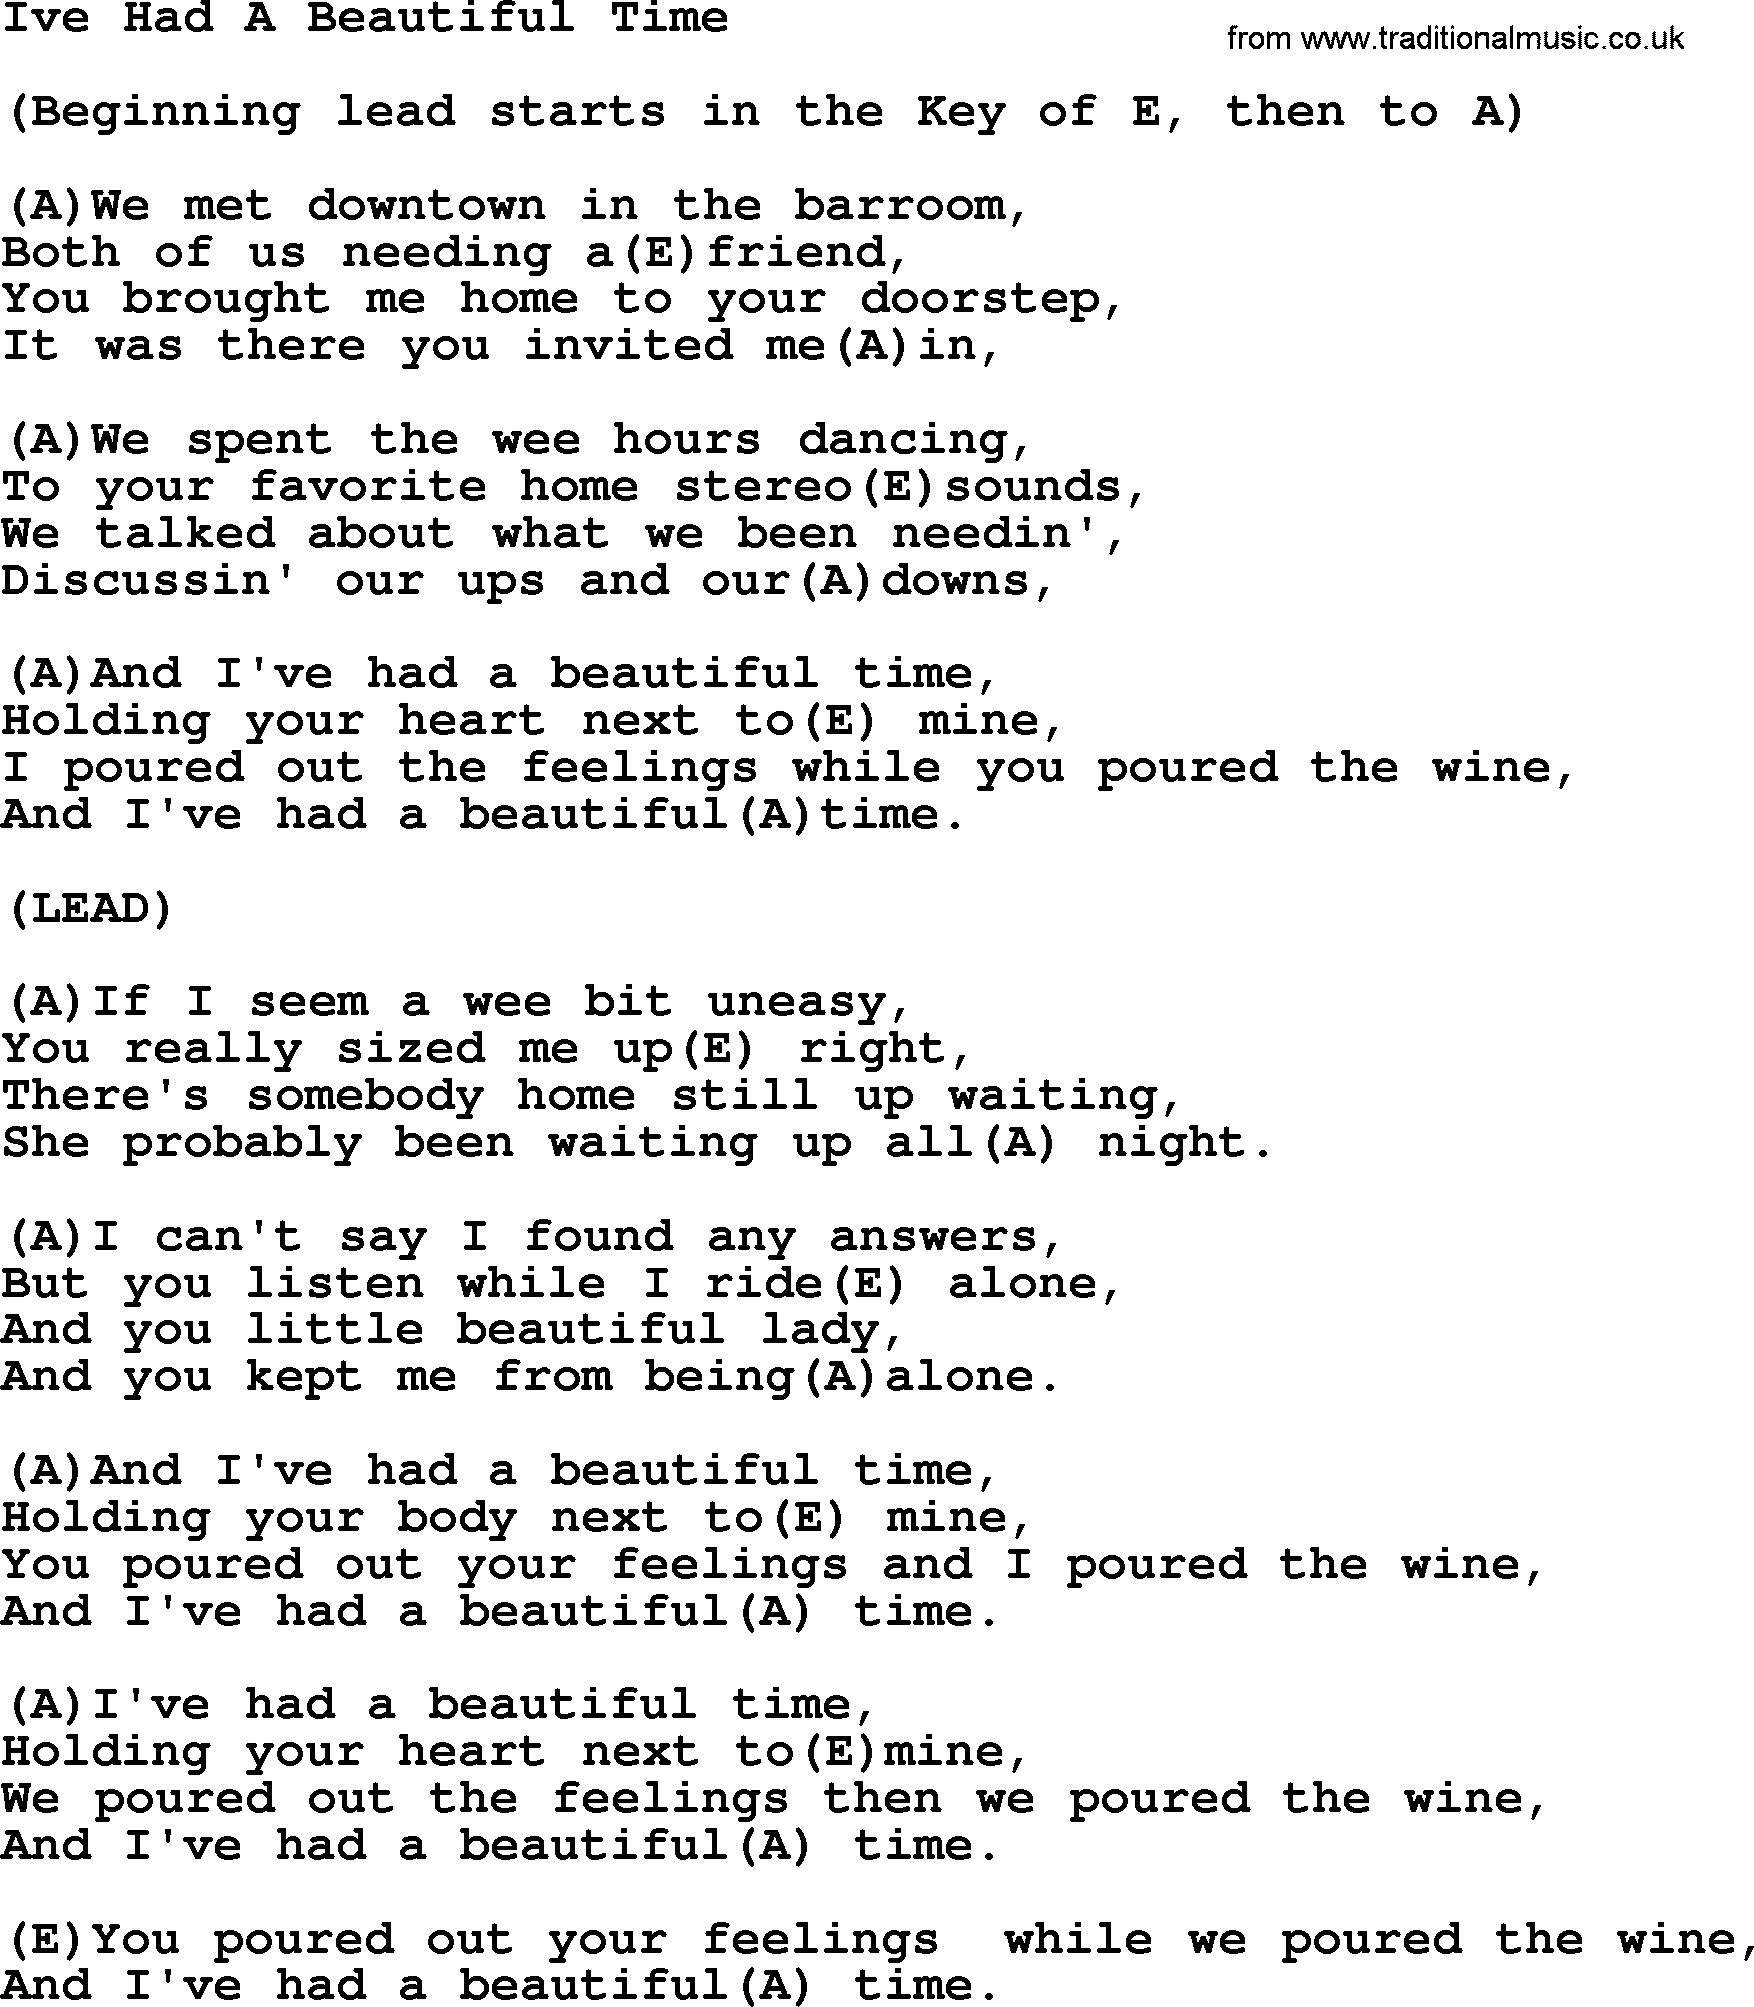 Merle Haggard song: Ive Had A Beautiful Time, lyrics and chords